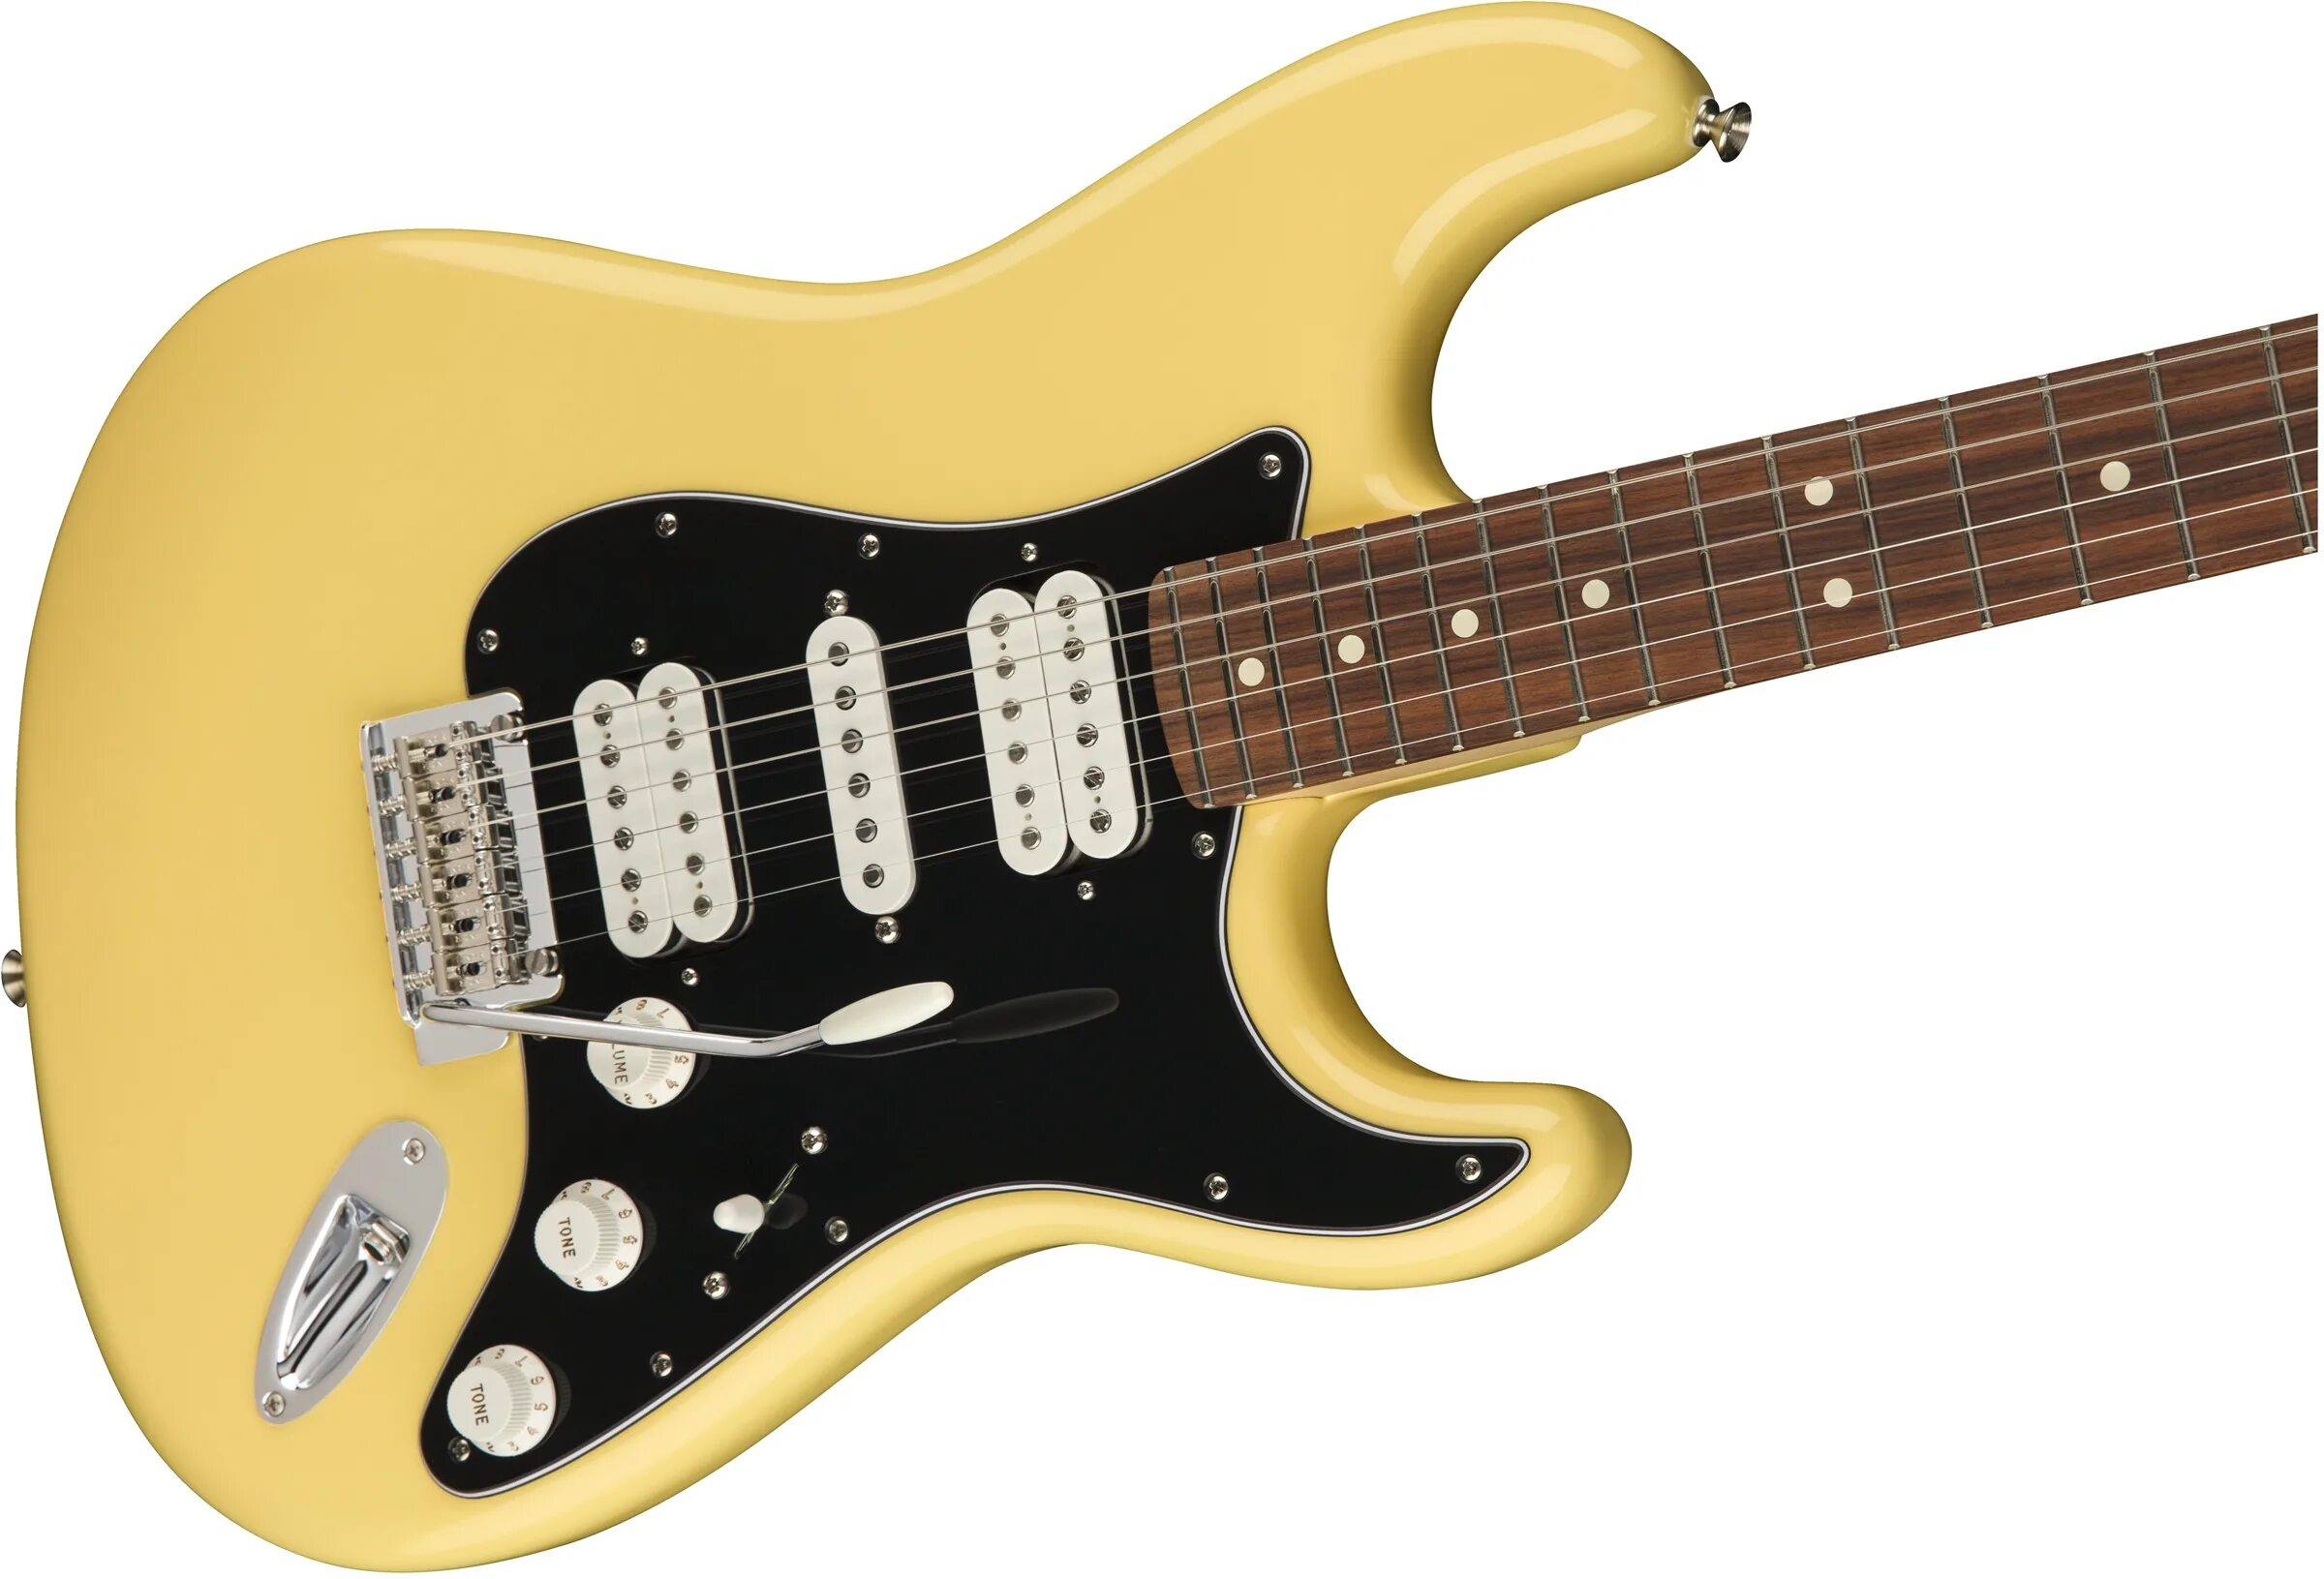 Гитара Fender Stratocaster. Электрогитара Fender Stratocaster желтая. Фендер стратокастер HSH. Электрогитара Fender Modern Player Stratocaster HSH.